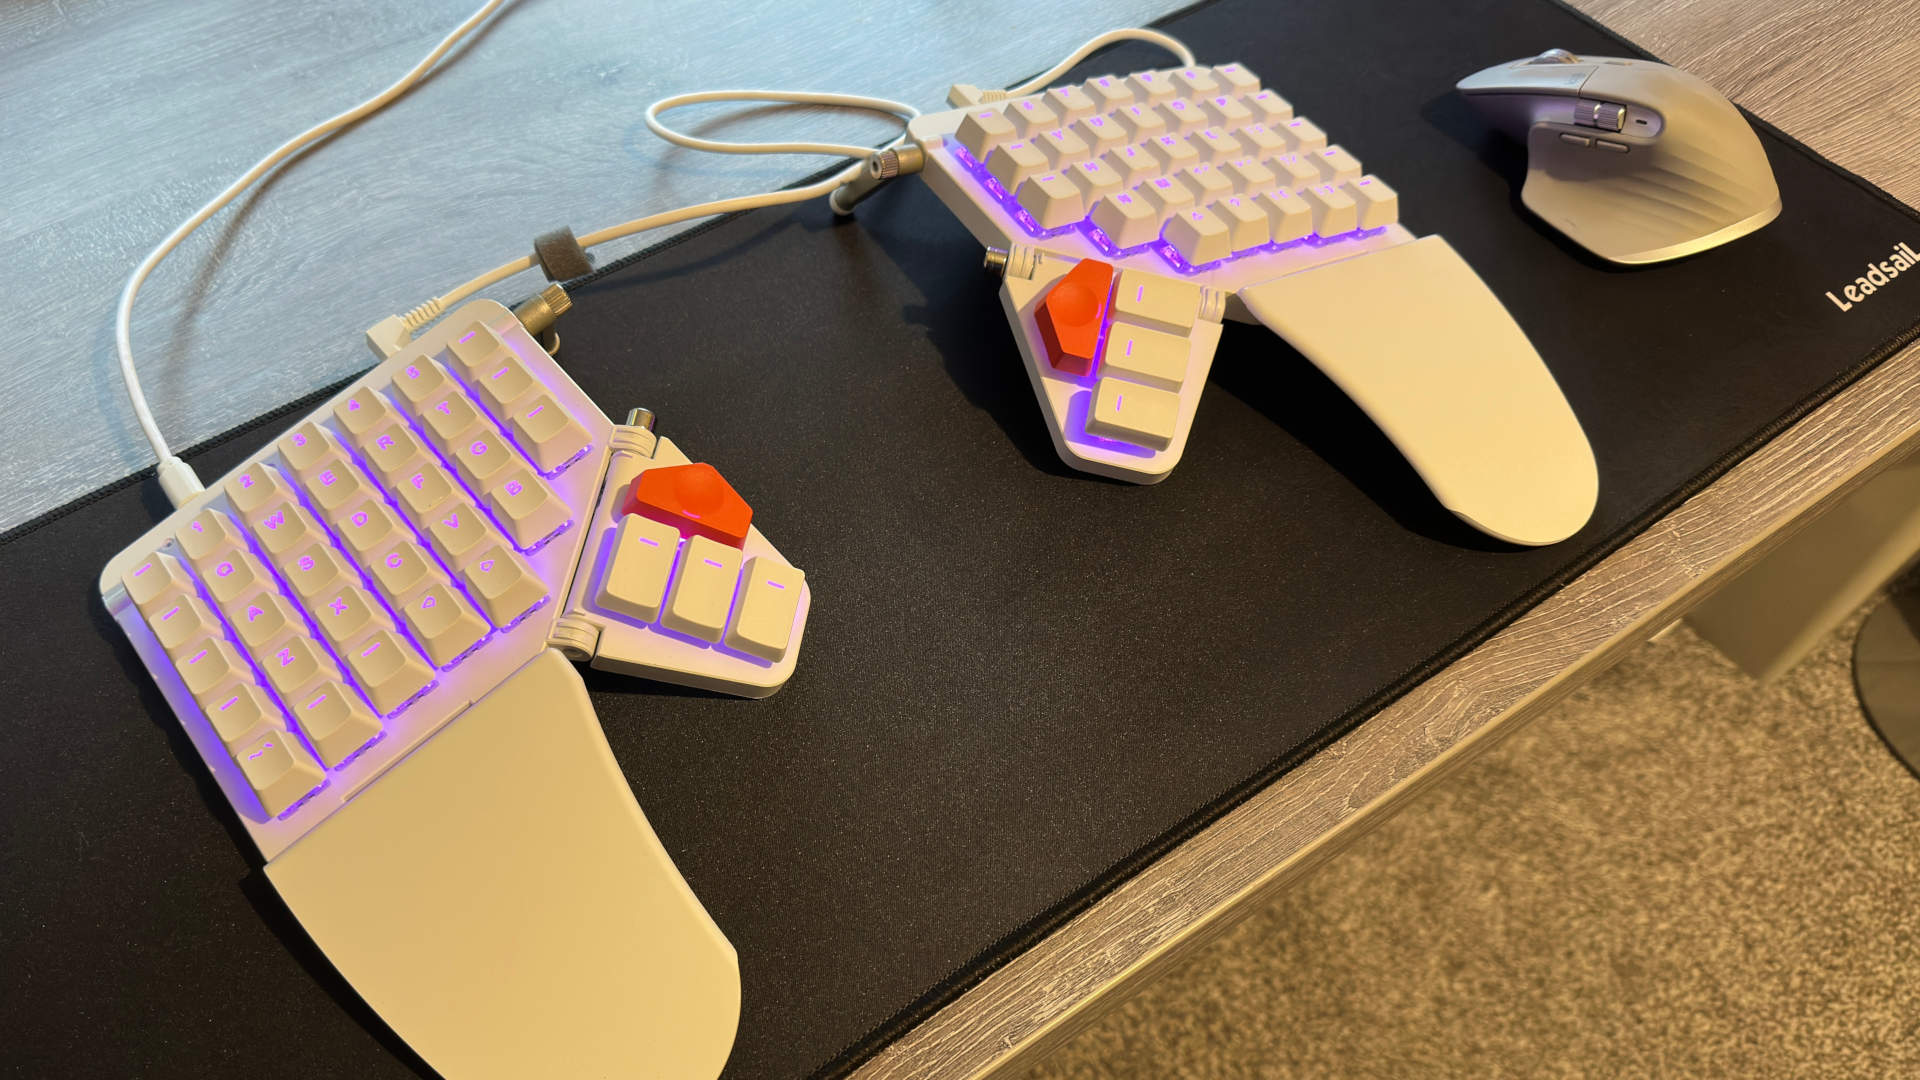 ZSA Moonlander ergonomic keyboard